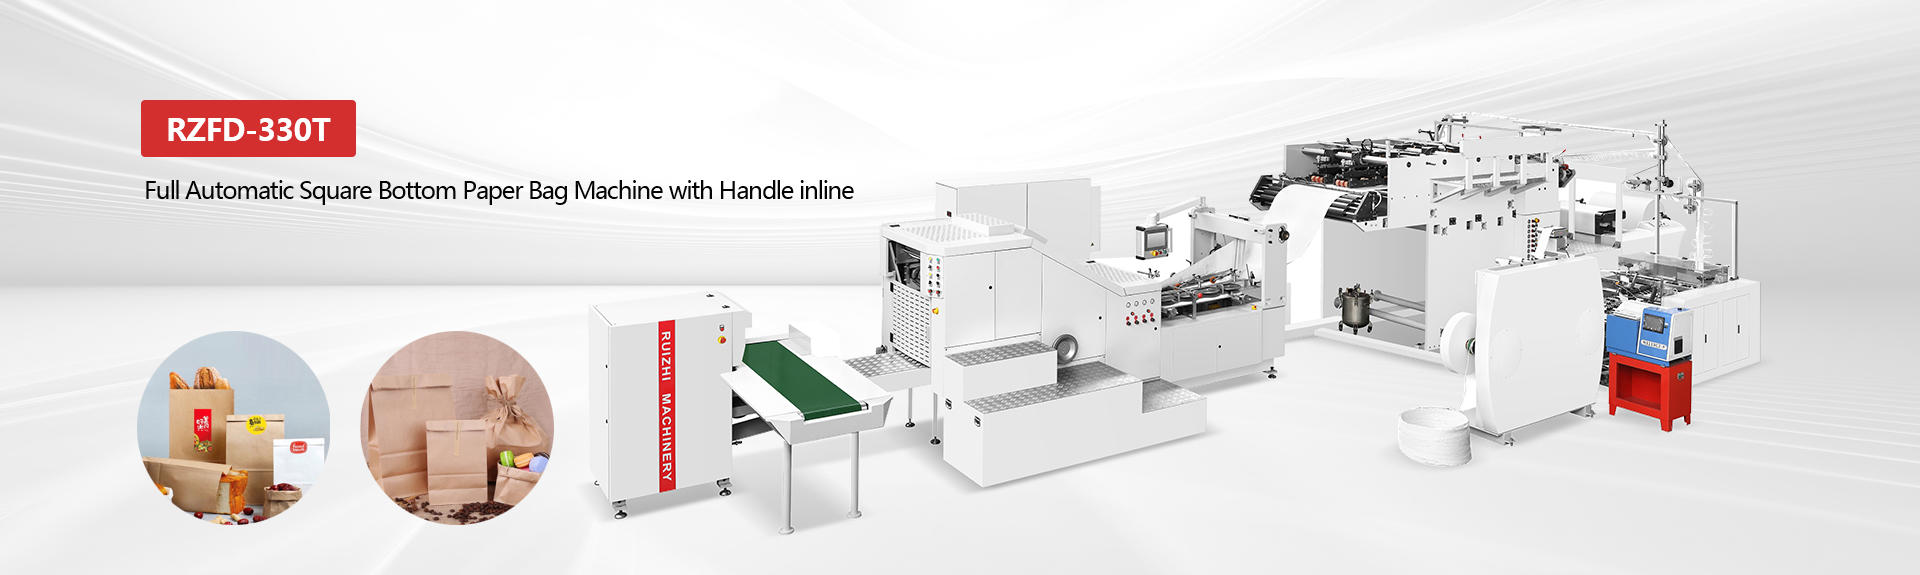 Fabricantes y proveedores de máquinas para fabricar bolsas de papel - Maquinaria de embalaje China mted (Ruizhi)